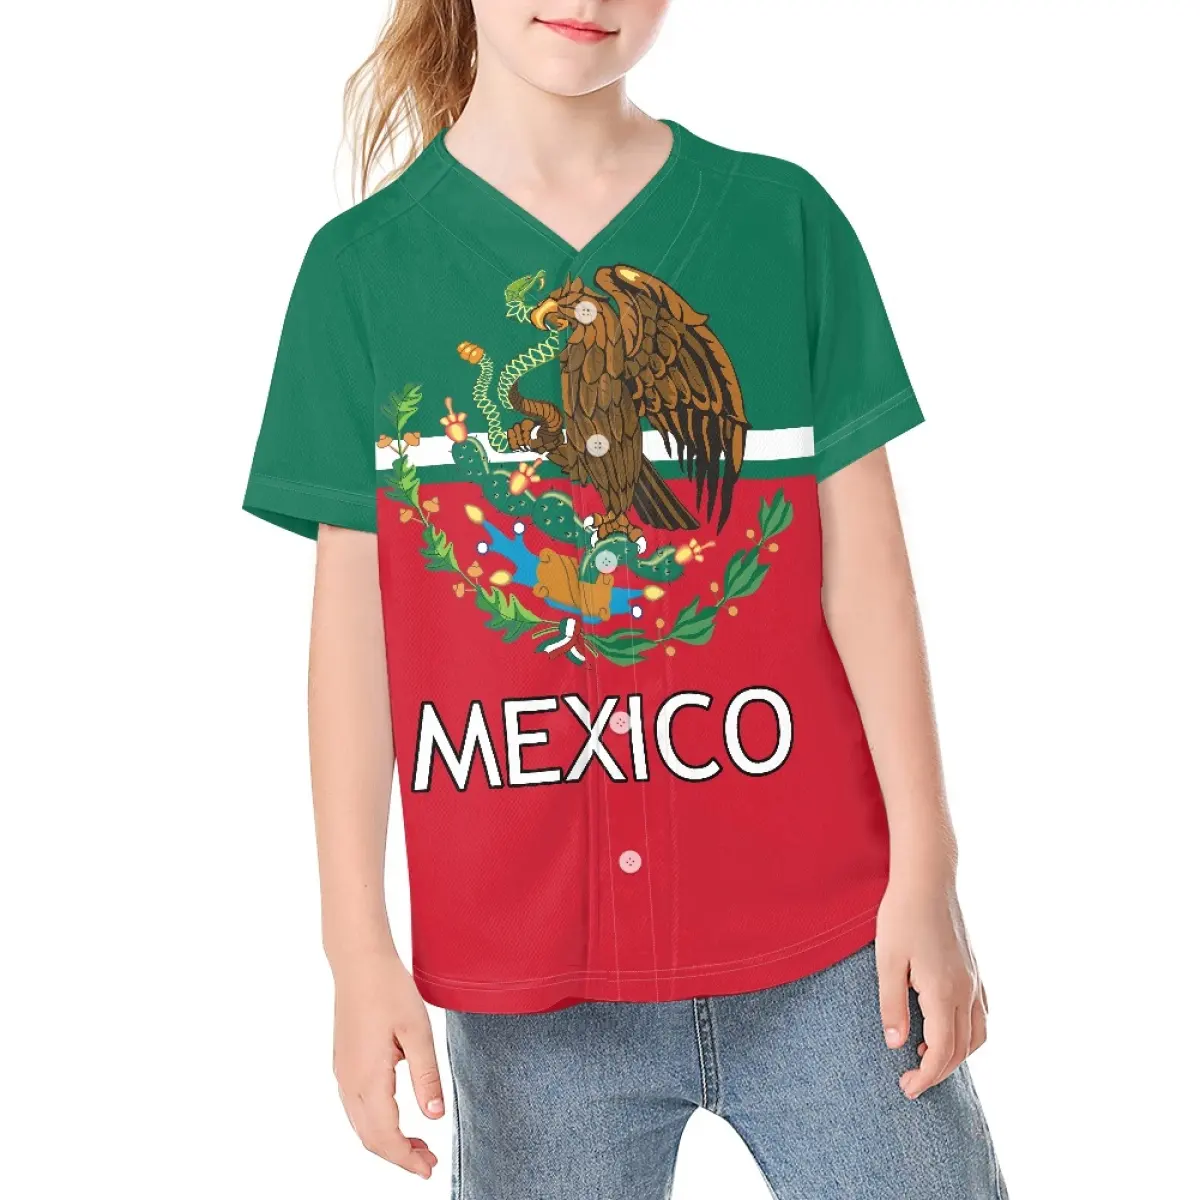 Desain bendera Meksiko kaus bisbol anak laki-laki kustom nama anak-anak/angka kemeja musim panas aktivitas Sekolah kaus dapat dipakai